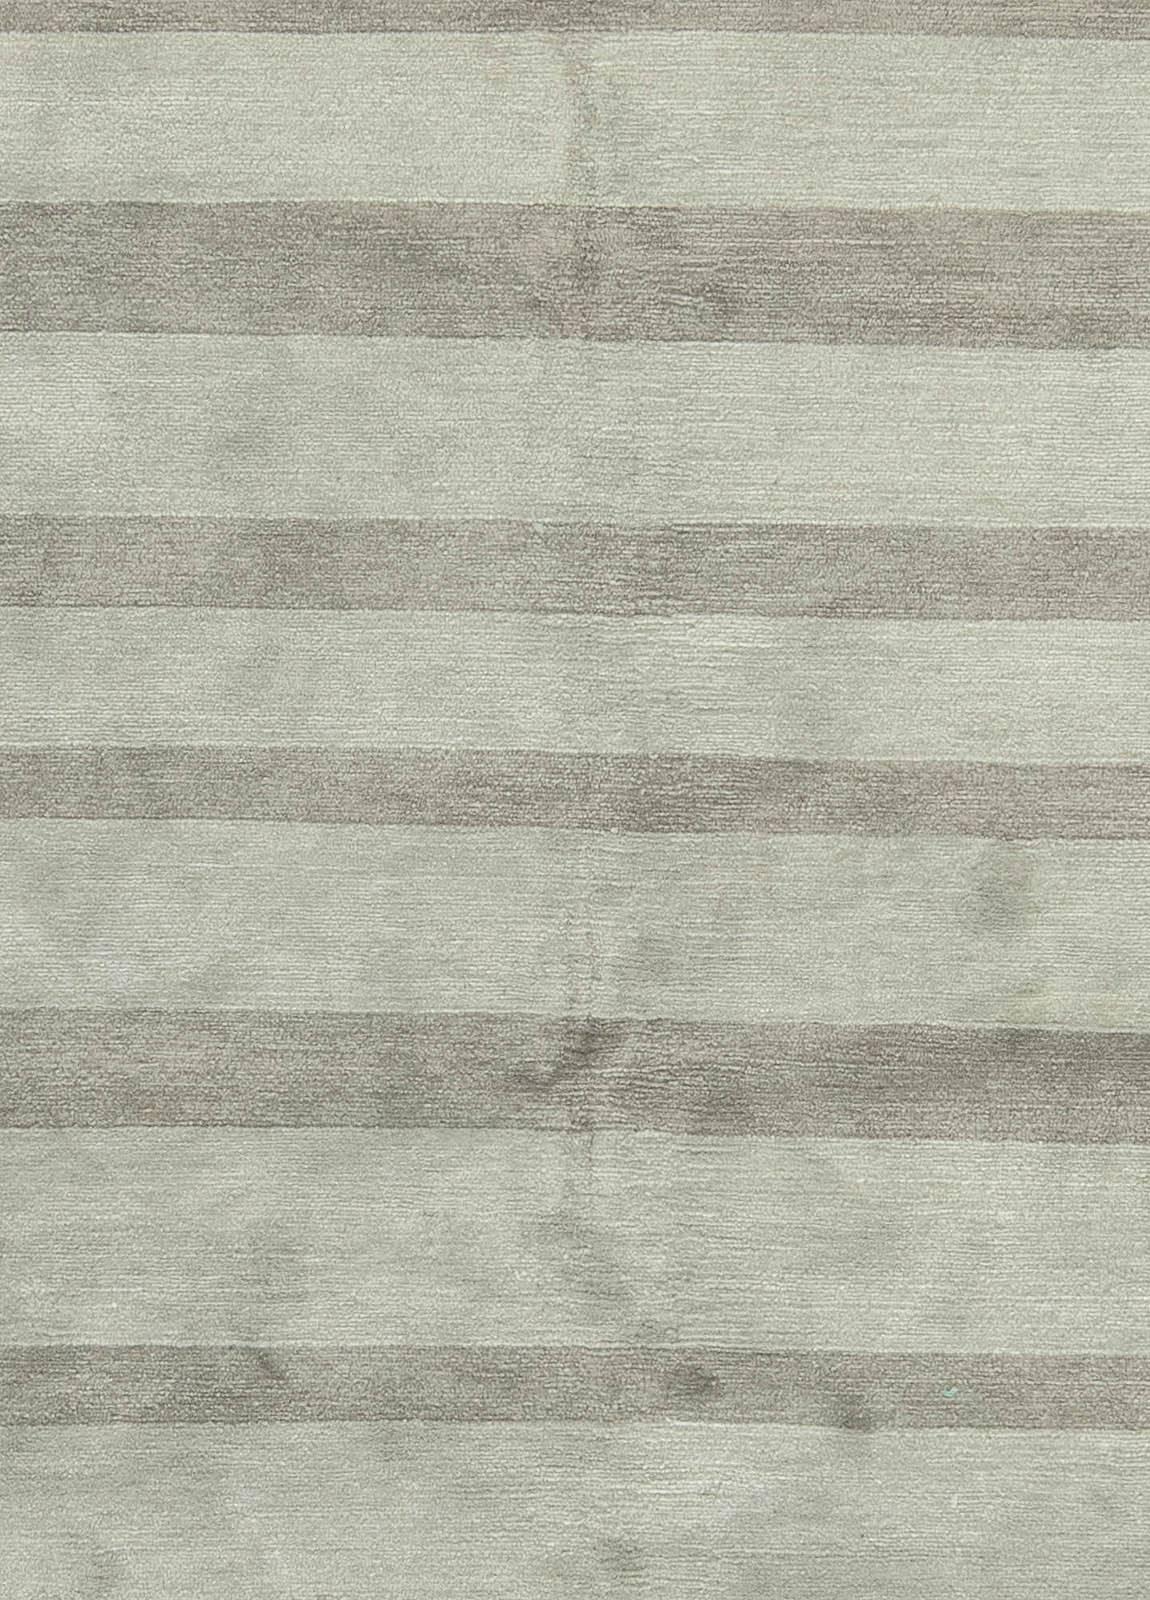 Modern striped grey handmade wool and silk custom rug by Doris Leslie Blau
Size: 9'0